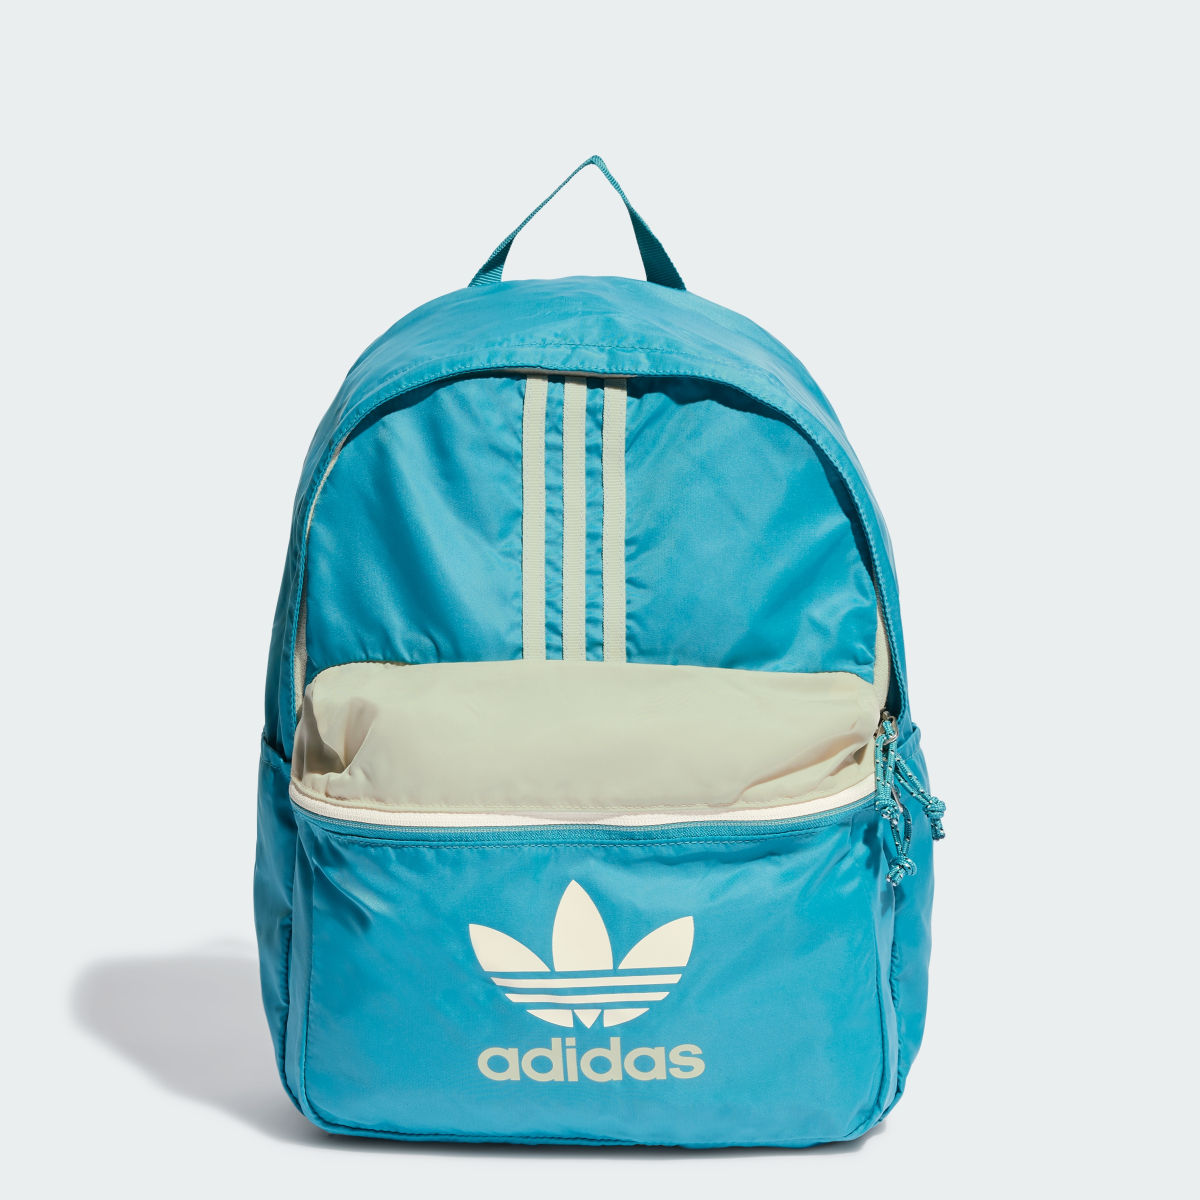 Archive Adicolor - Adidas Backpack IQ3514